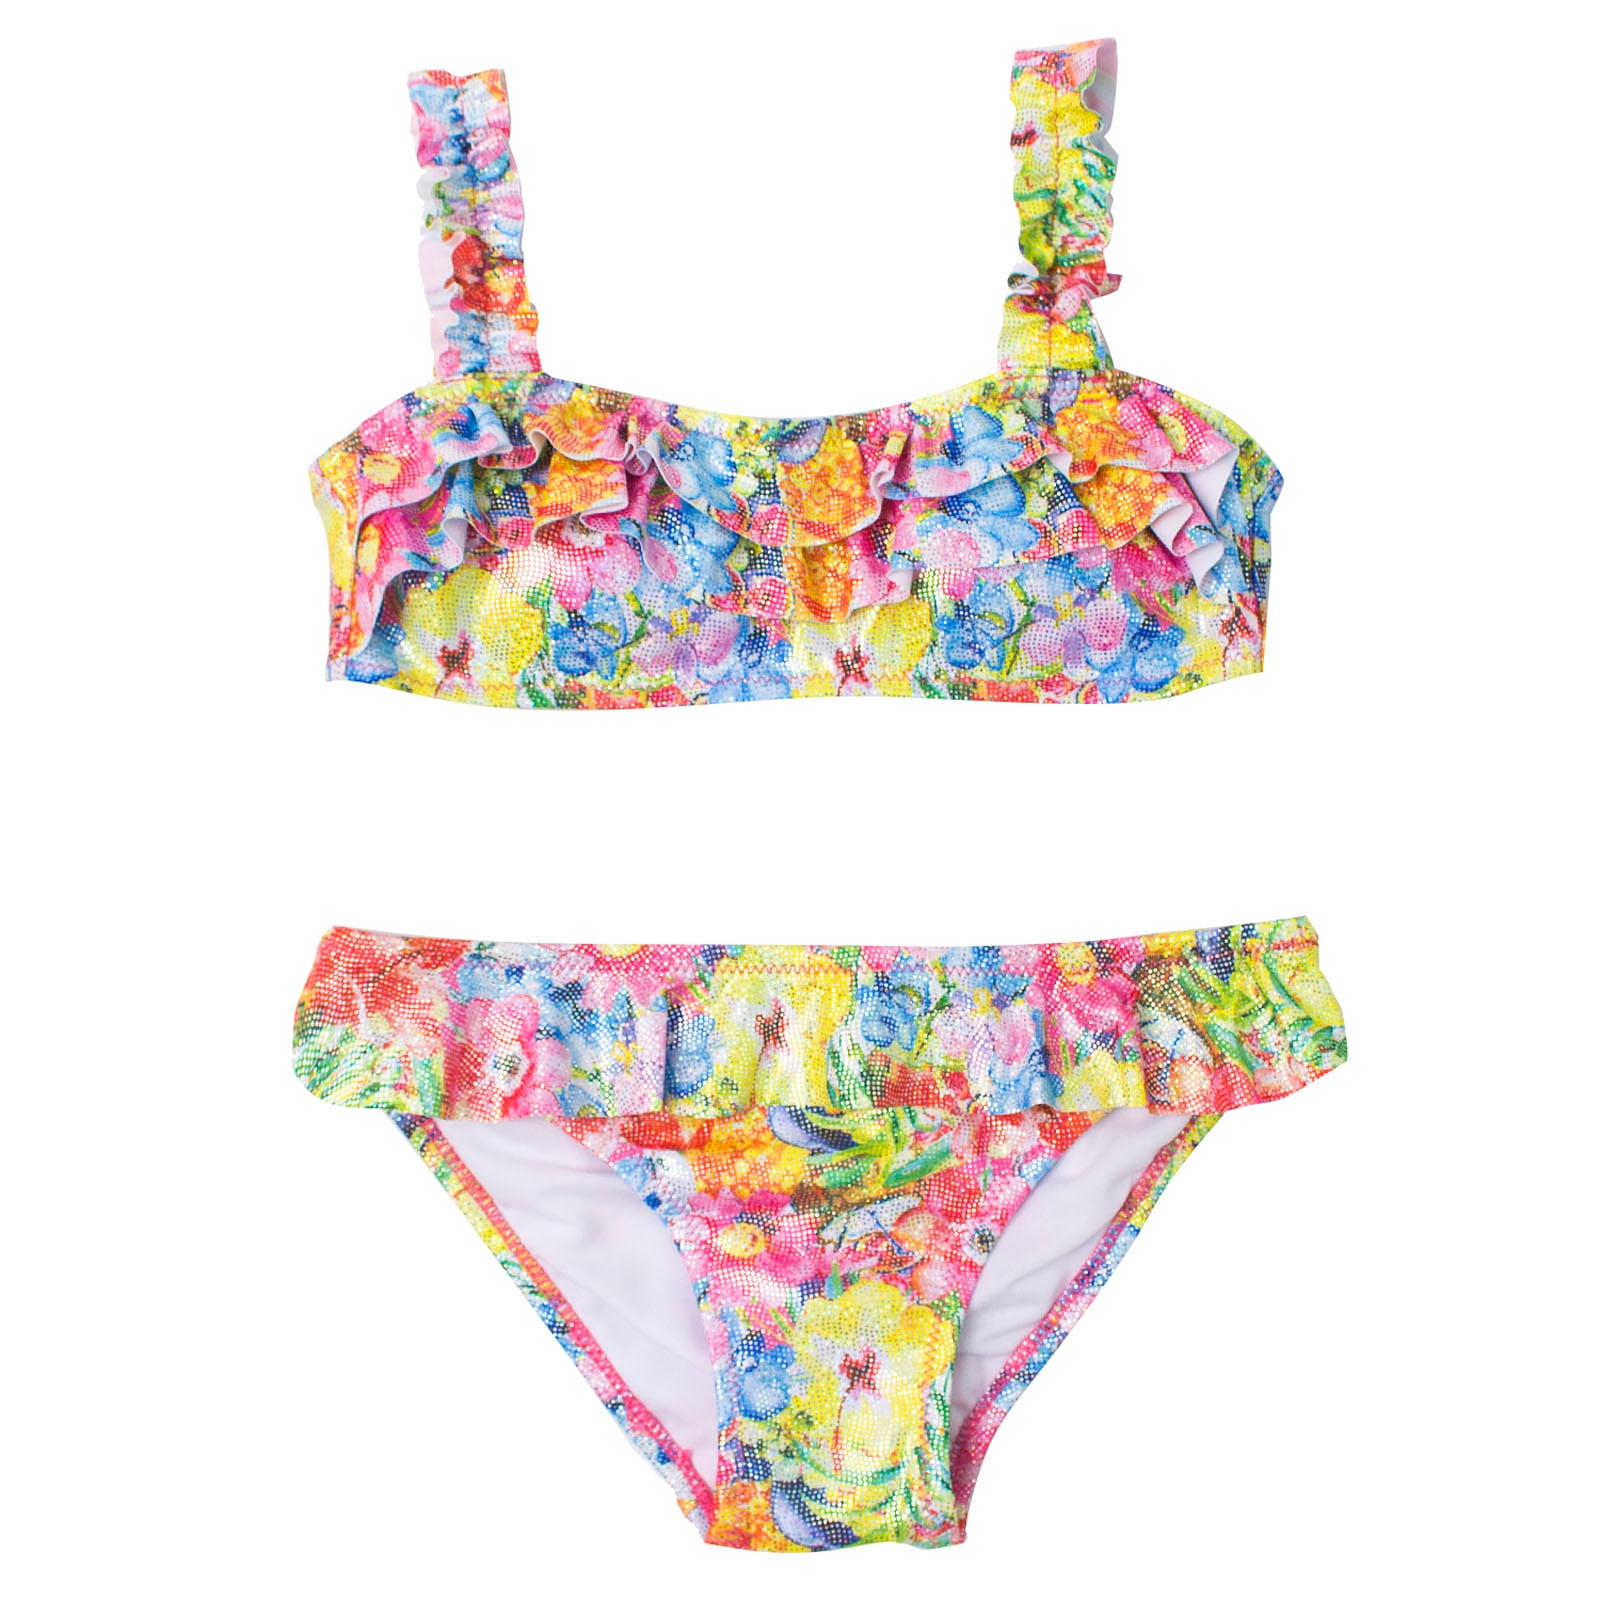 QIPOPIQ Girls Swimsuits Clearance Toddler Girls Kids Swimsuit Sling Flower  Dolphin Print Beach Ruffle Bikini Suit 